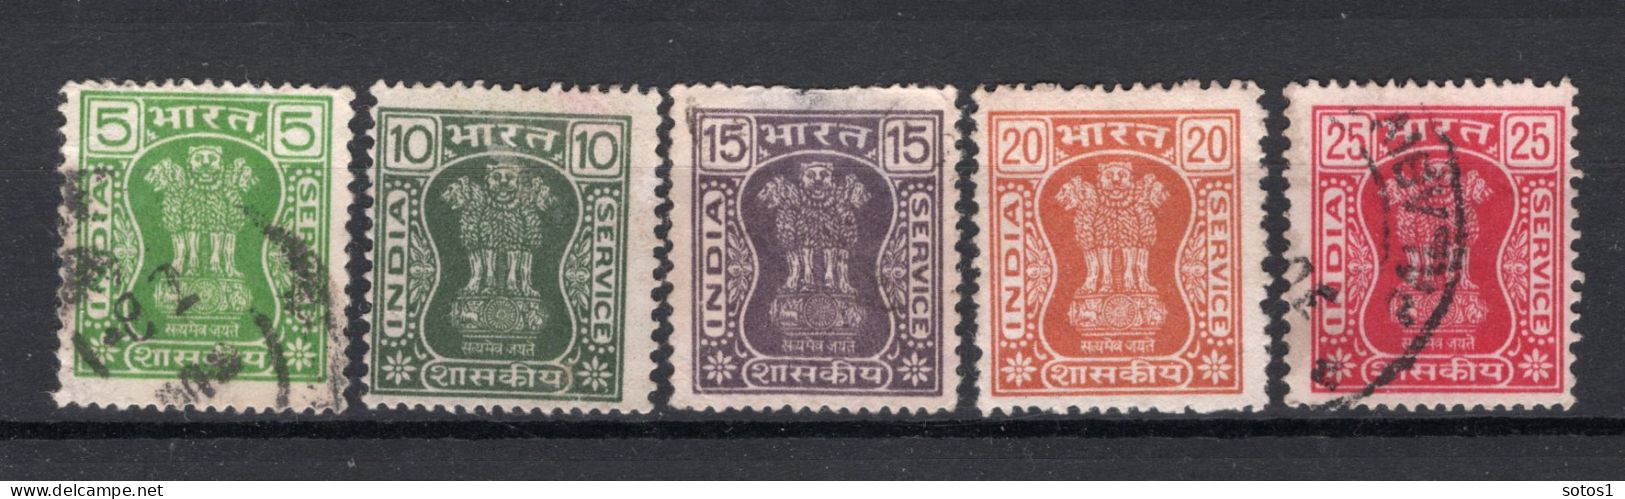 INDIA Yt. S54/58° Gestempeld Dienstzegel 1976-1981 - Timbres De Service